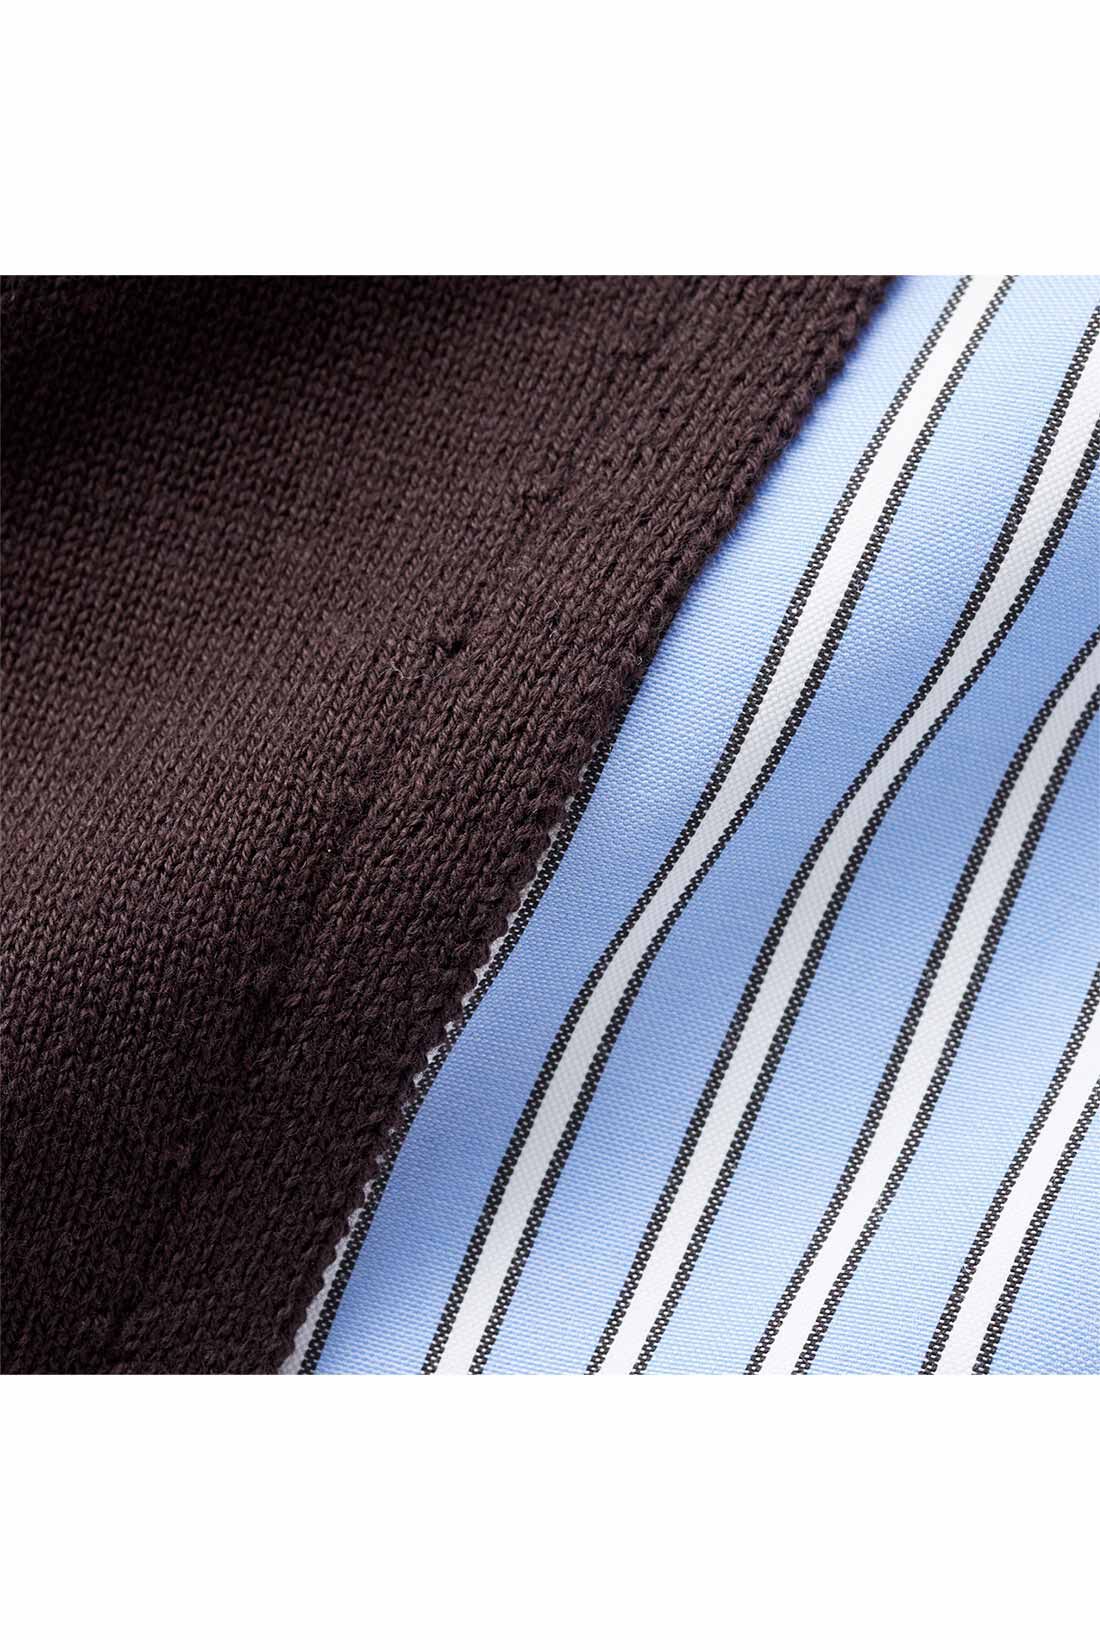 IEDIT[イディット]　異素材切り替えのストライプシャツ ドッキングニットトップス〈ブラック〉|秋口からさらっと着られるコットンニットとストライプシャツの組み合わせ。